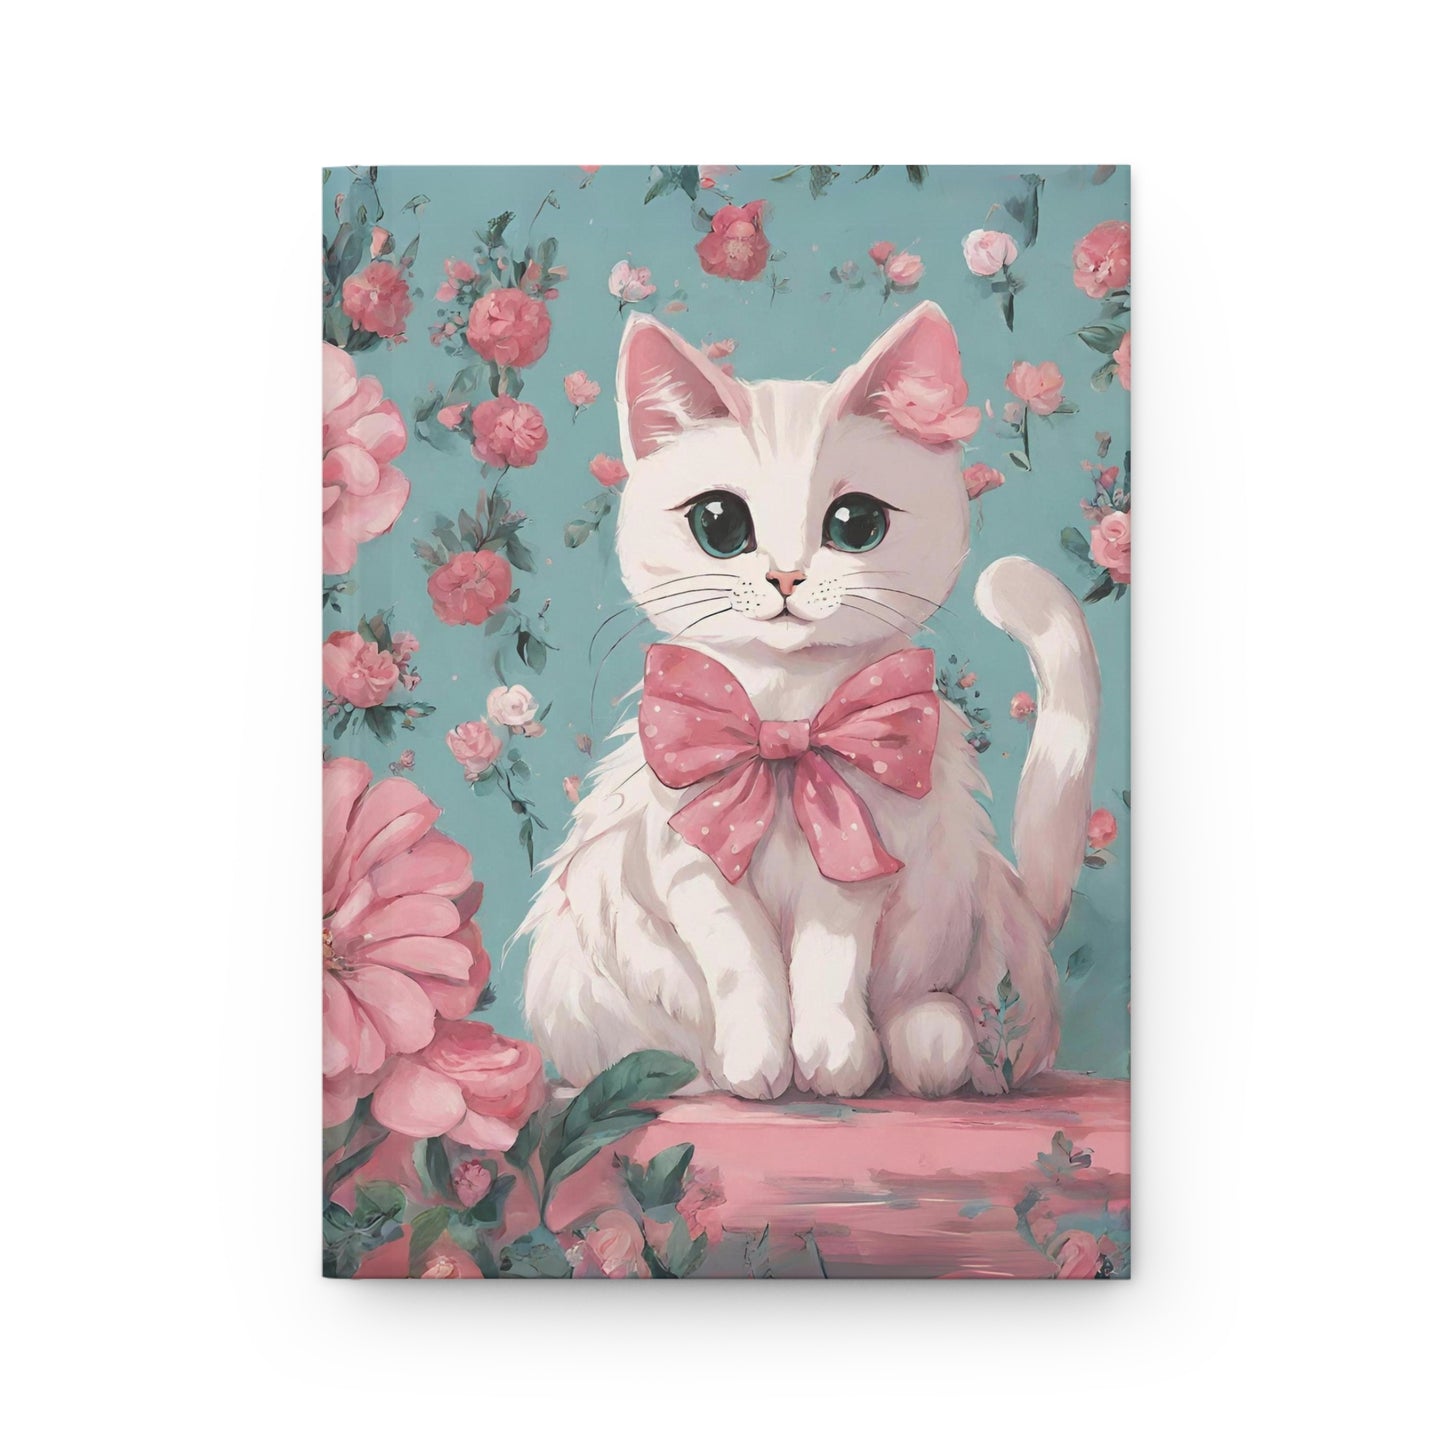 Cute Floral Cat Hardcover Journal Matte